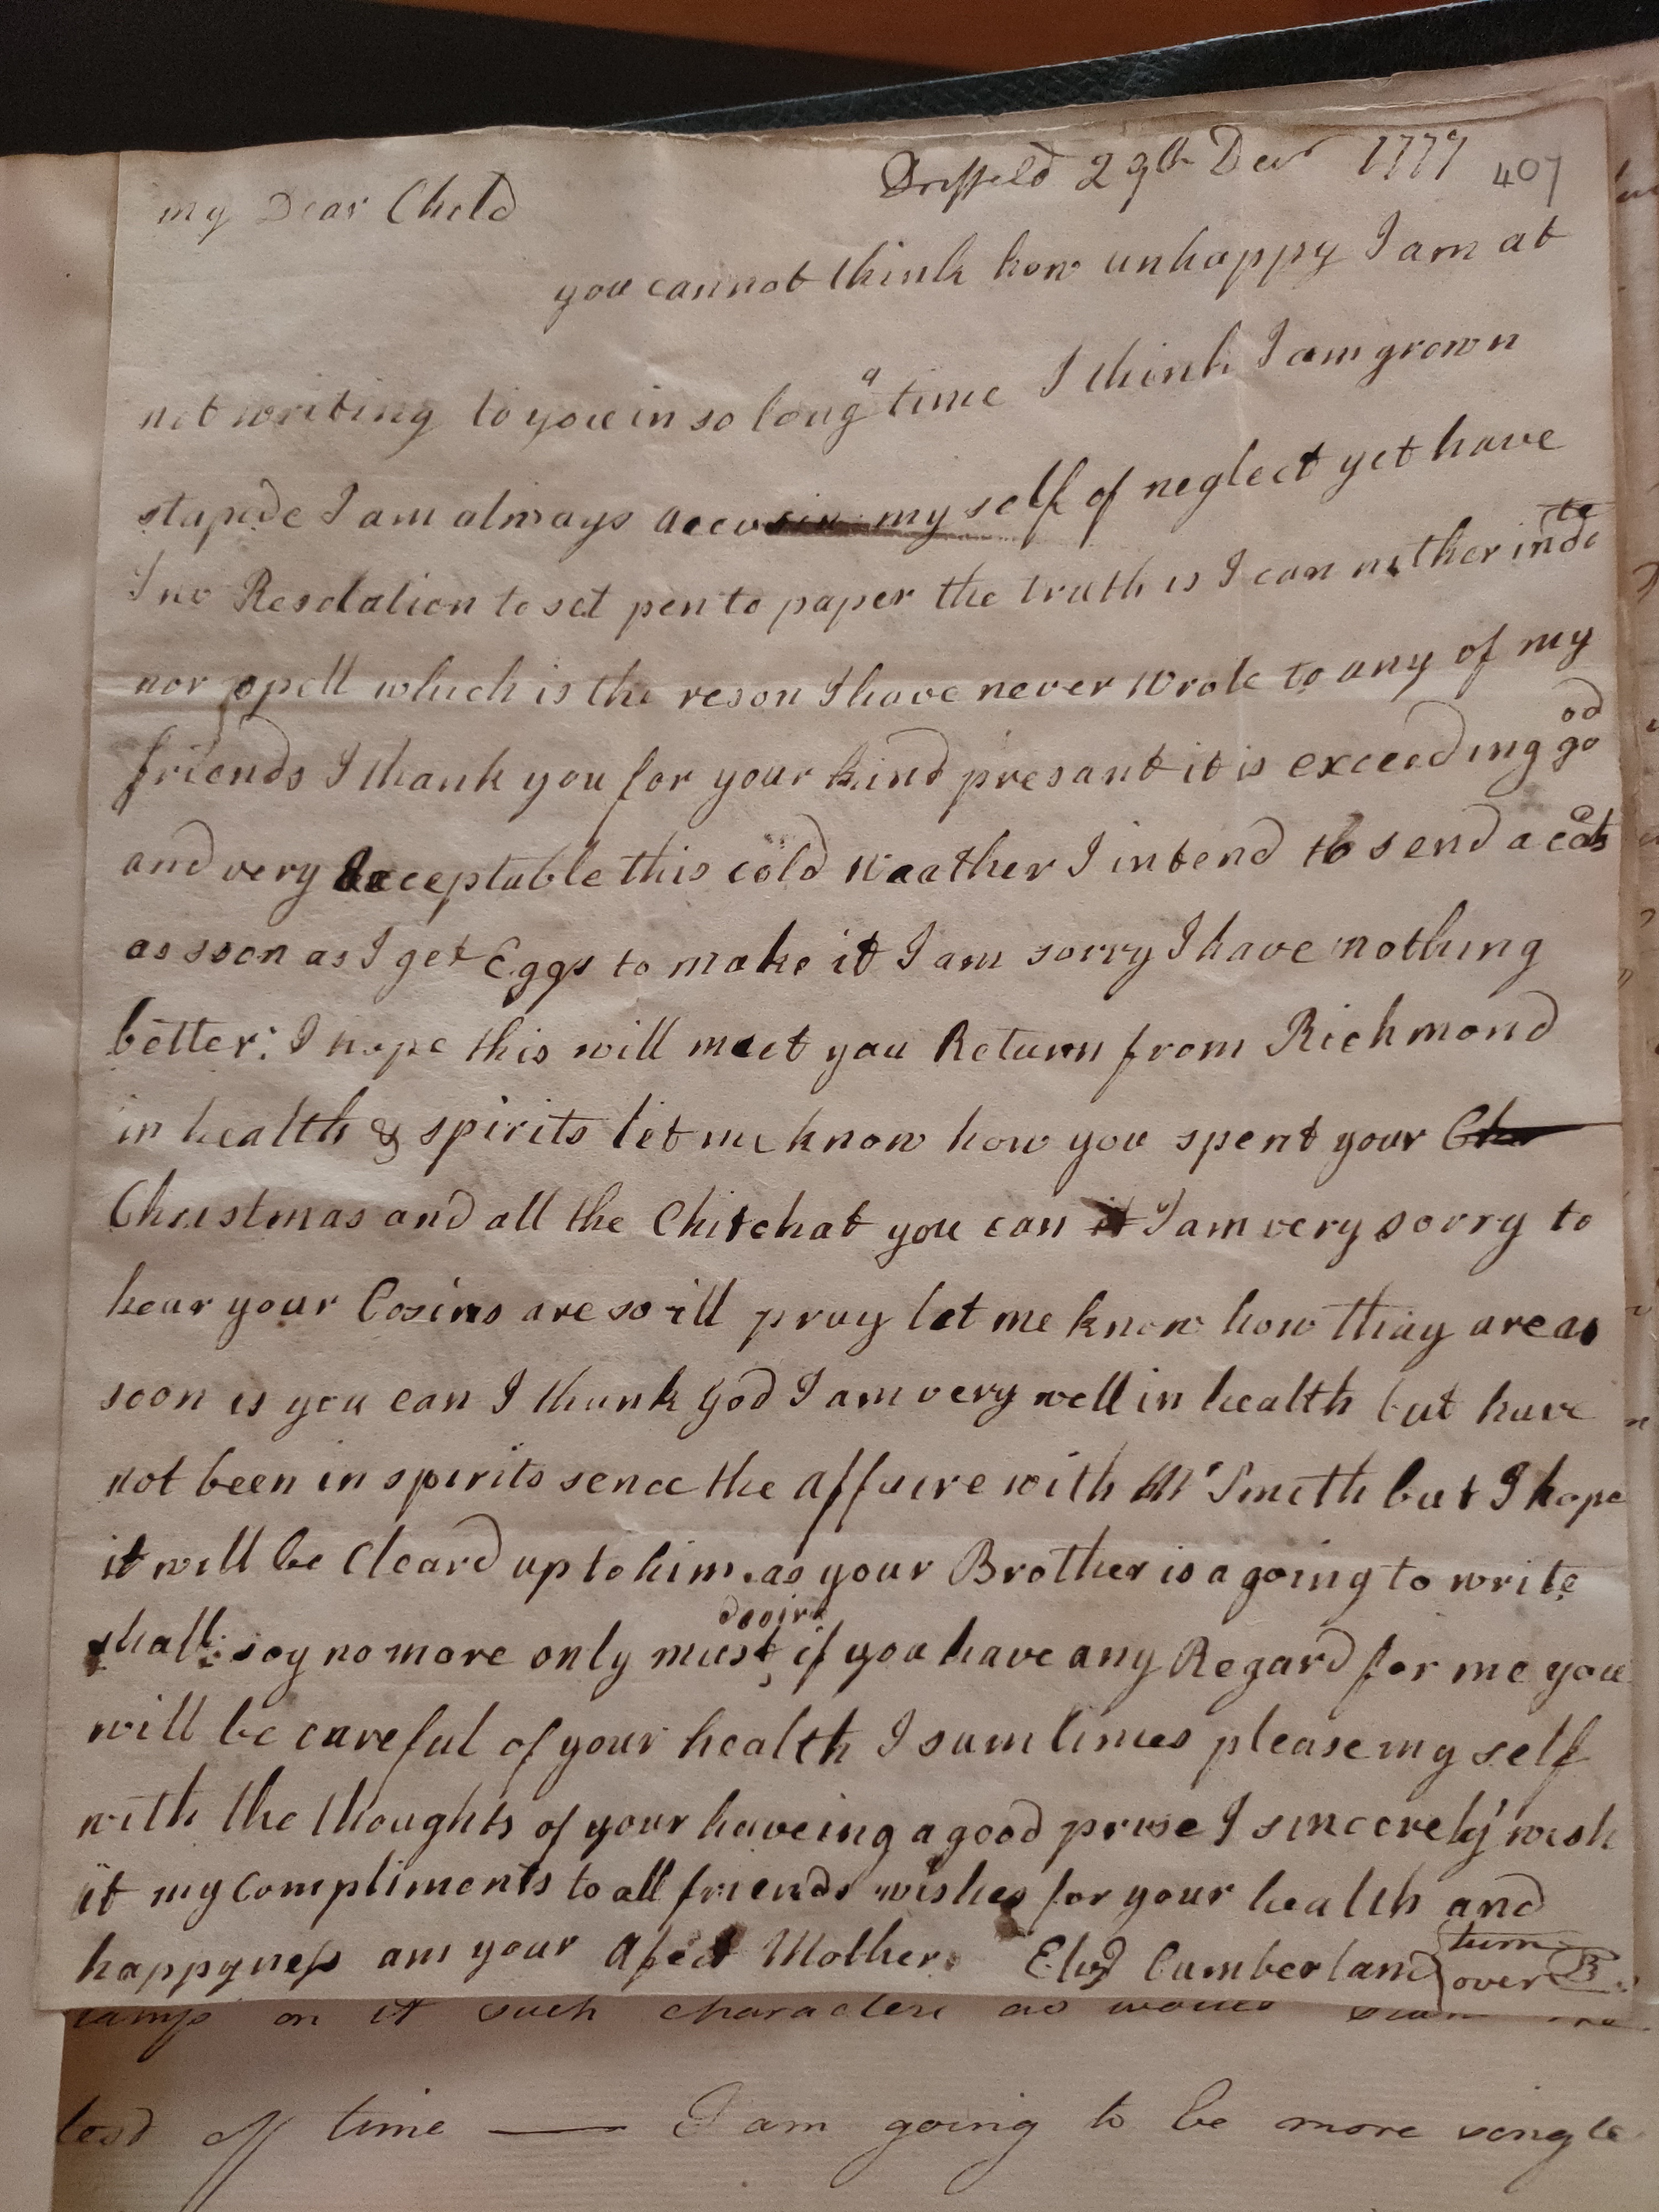 Image #1 of letter: Elizabeth Cumberland and Richard Cumberland to George Cumberland, 29 December 1777